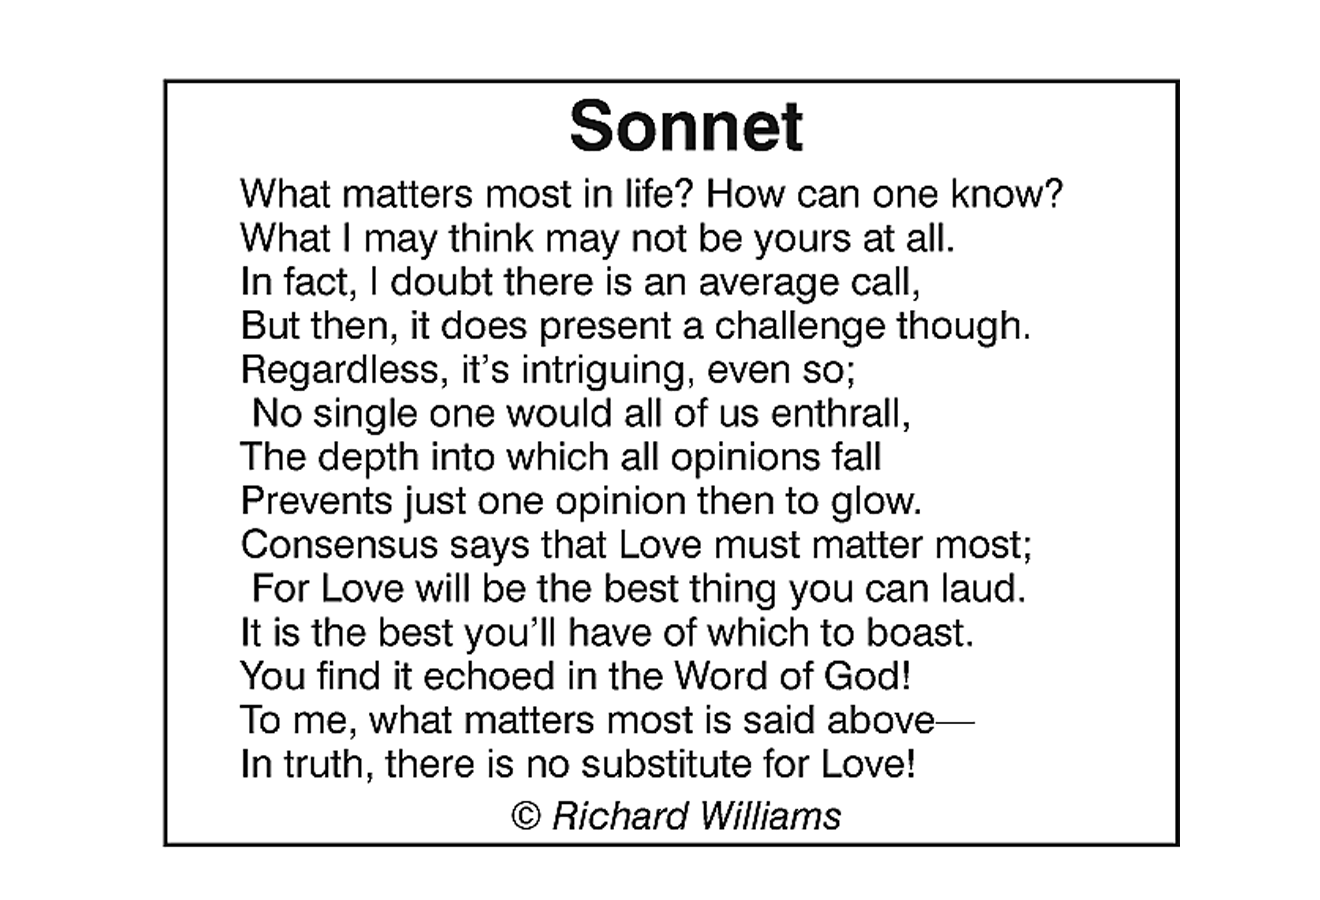 Richard Williams Poem - Sonnet 4-25-19